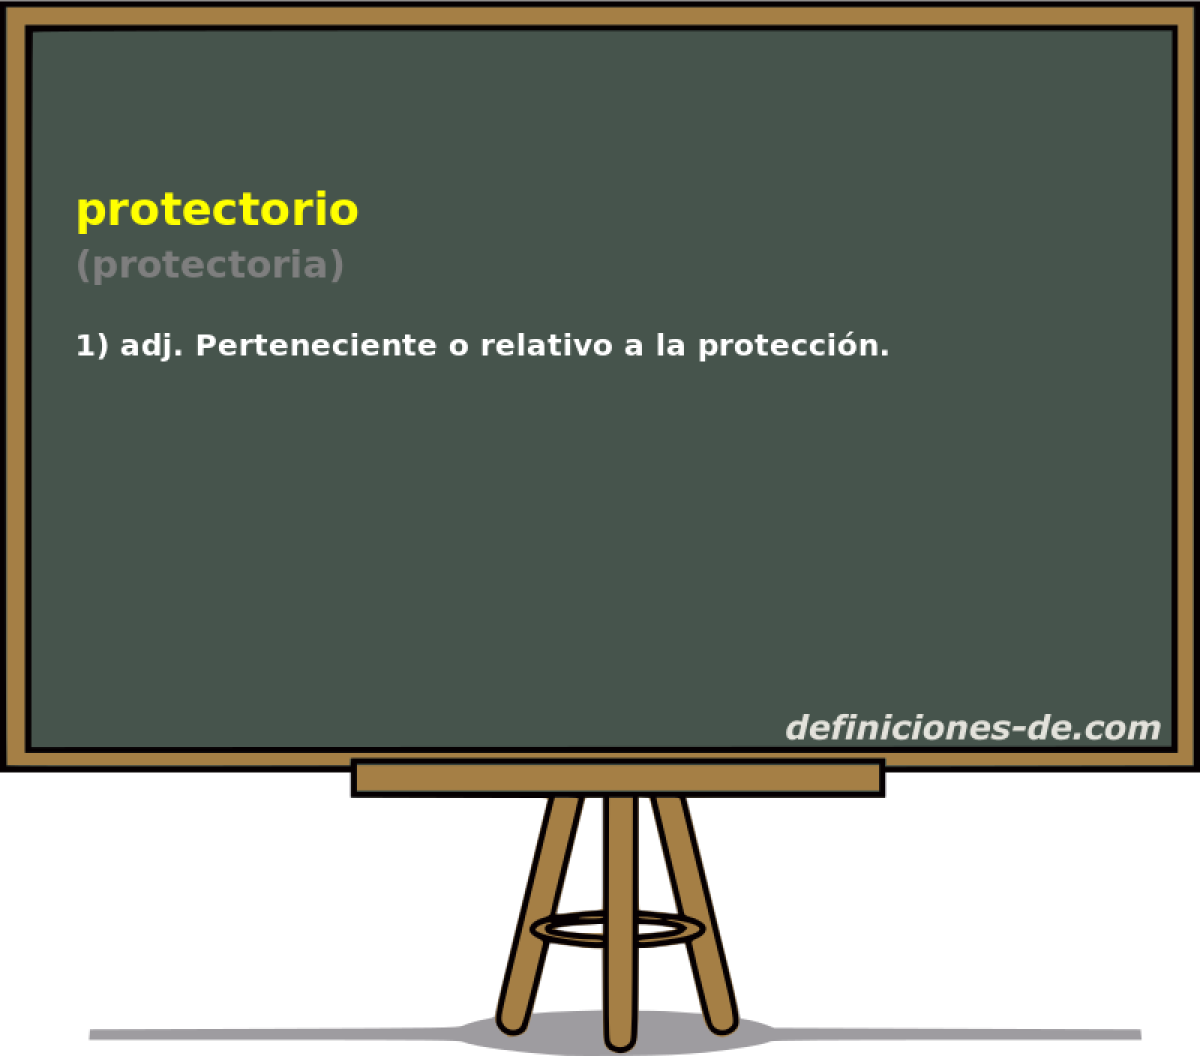 protectorio (protectoria)